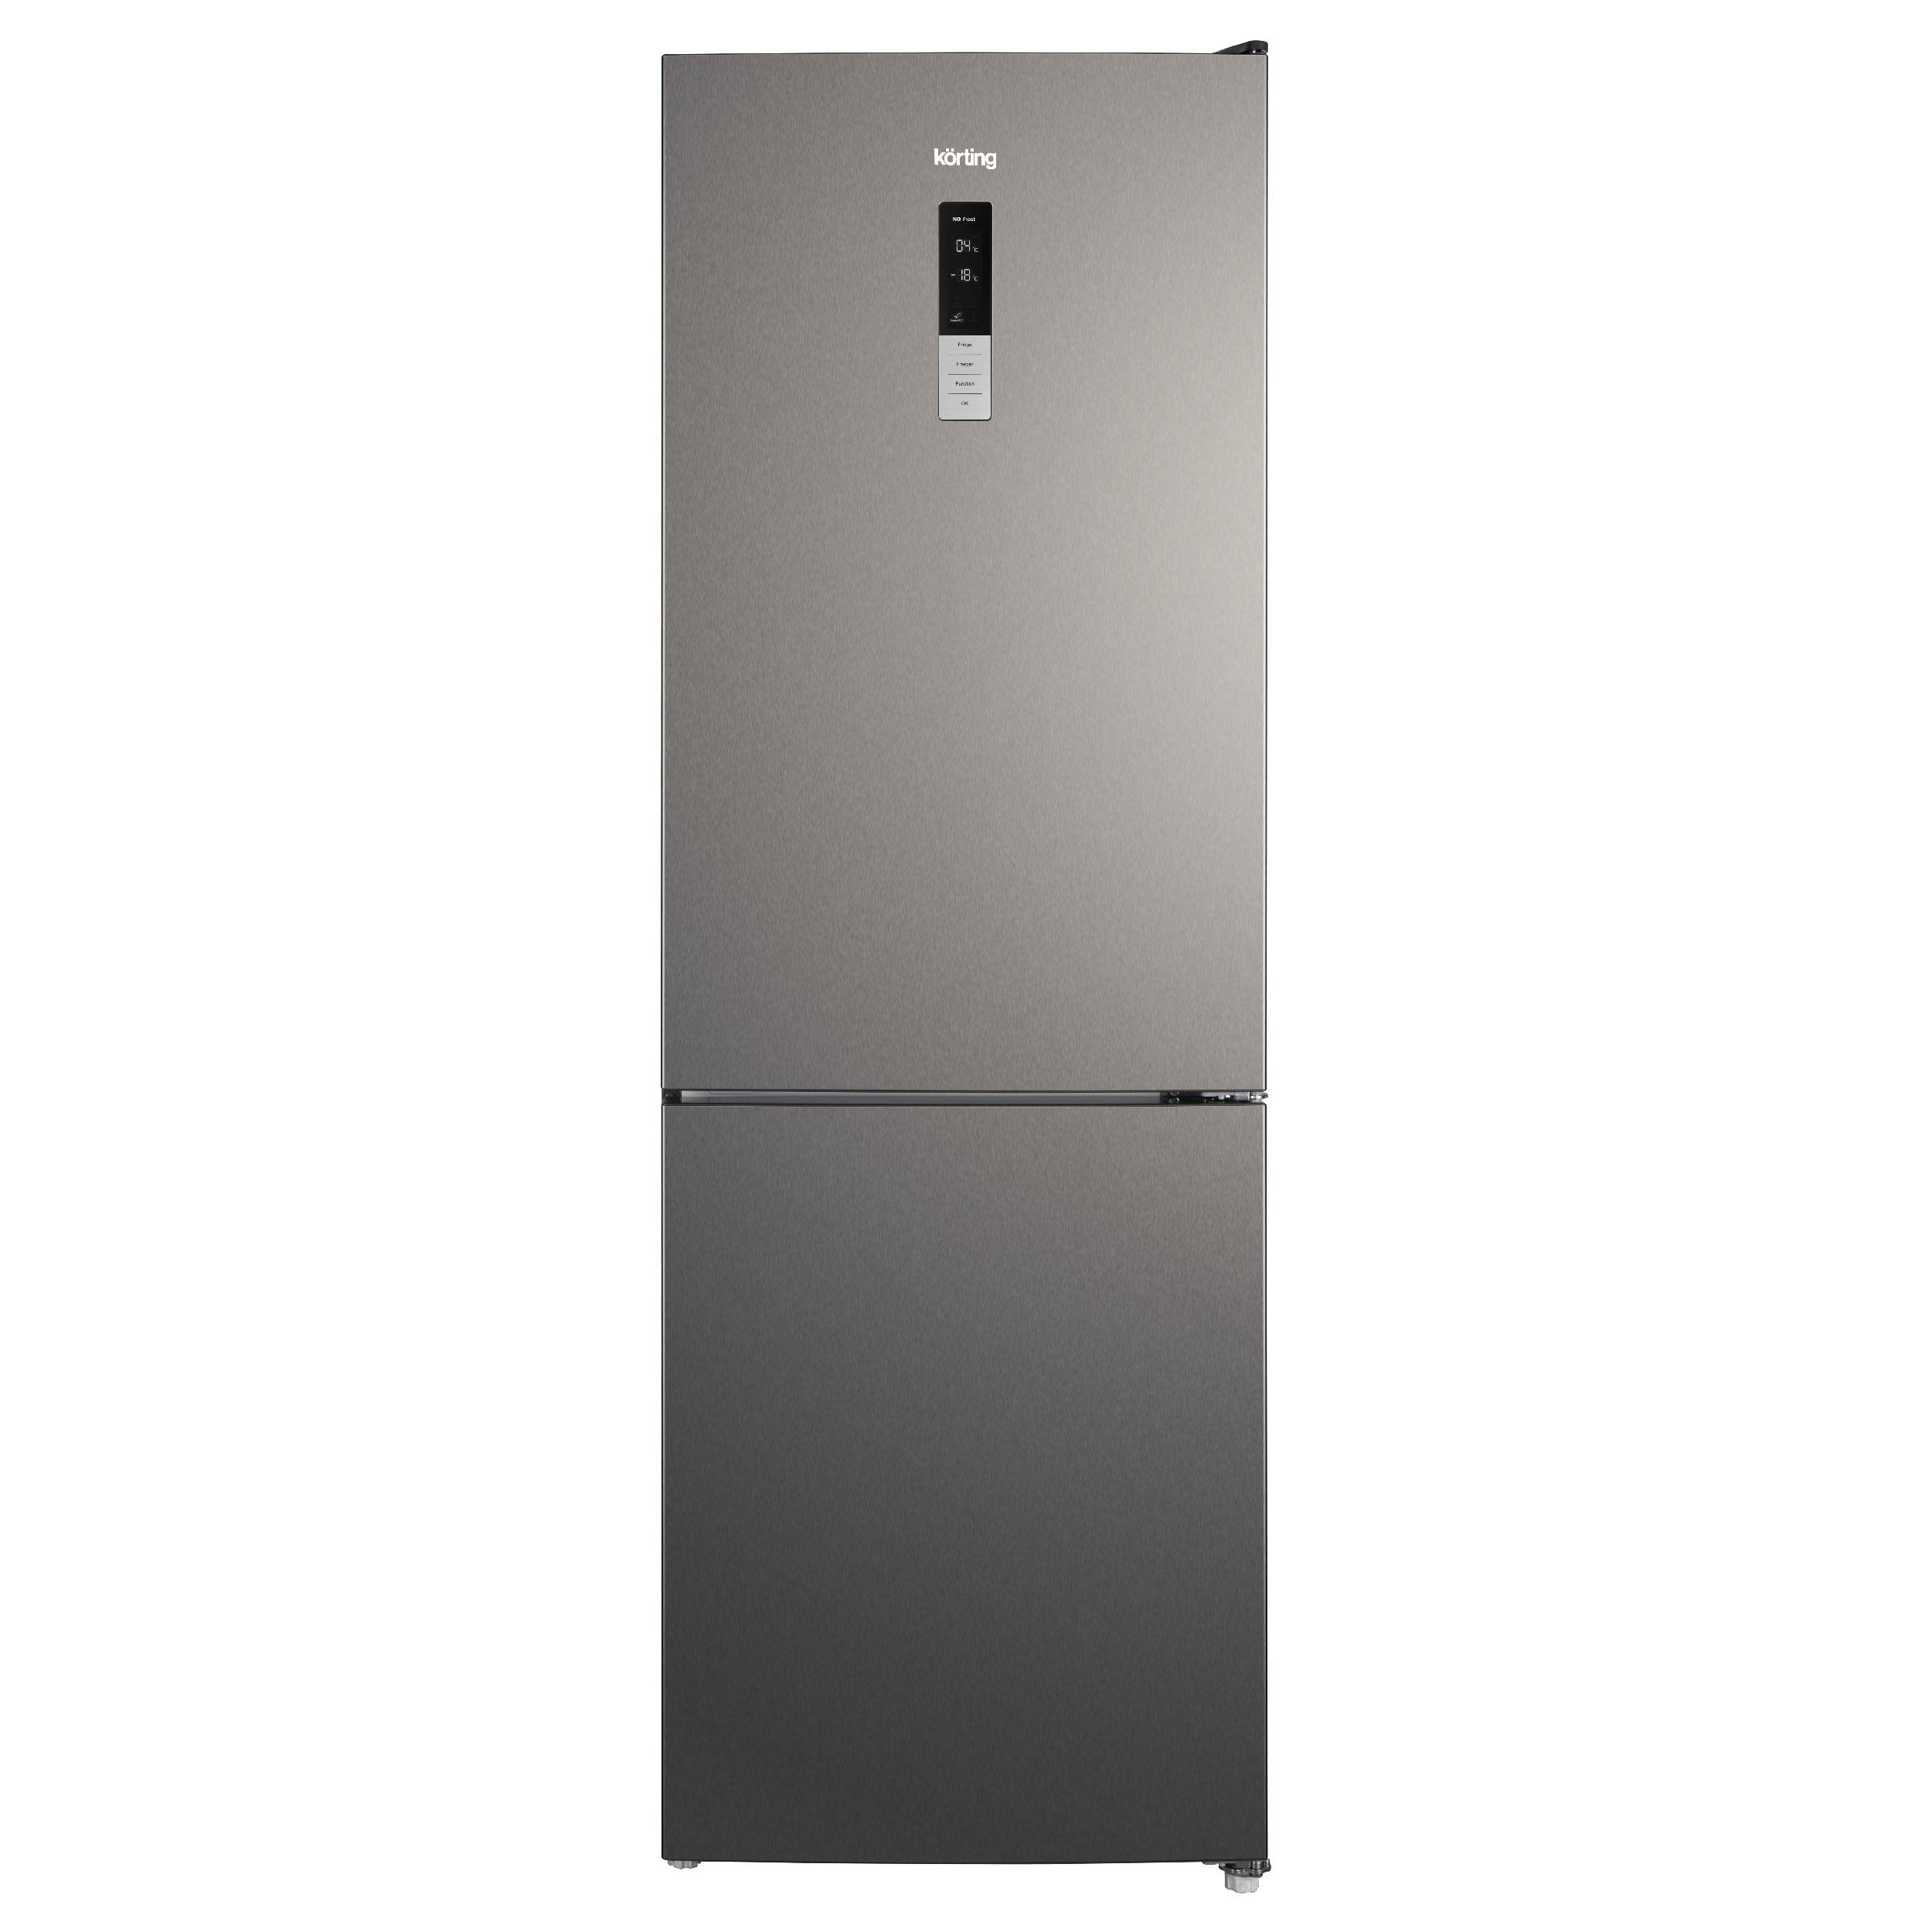 Холодильник Korting KNFC 61869 X серебристый, серый холодильник korting knfc 62017 x серый